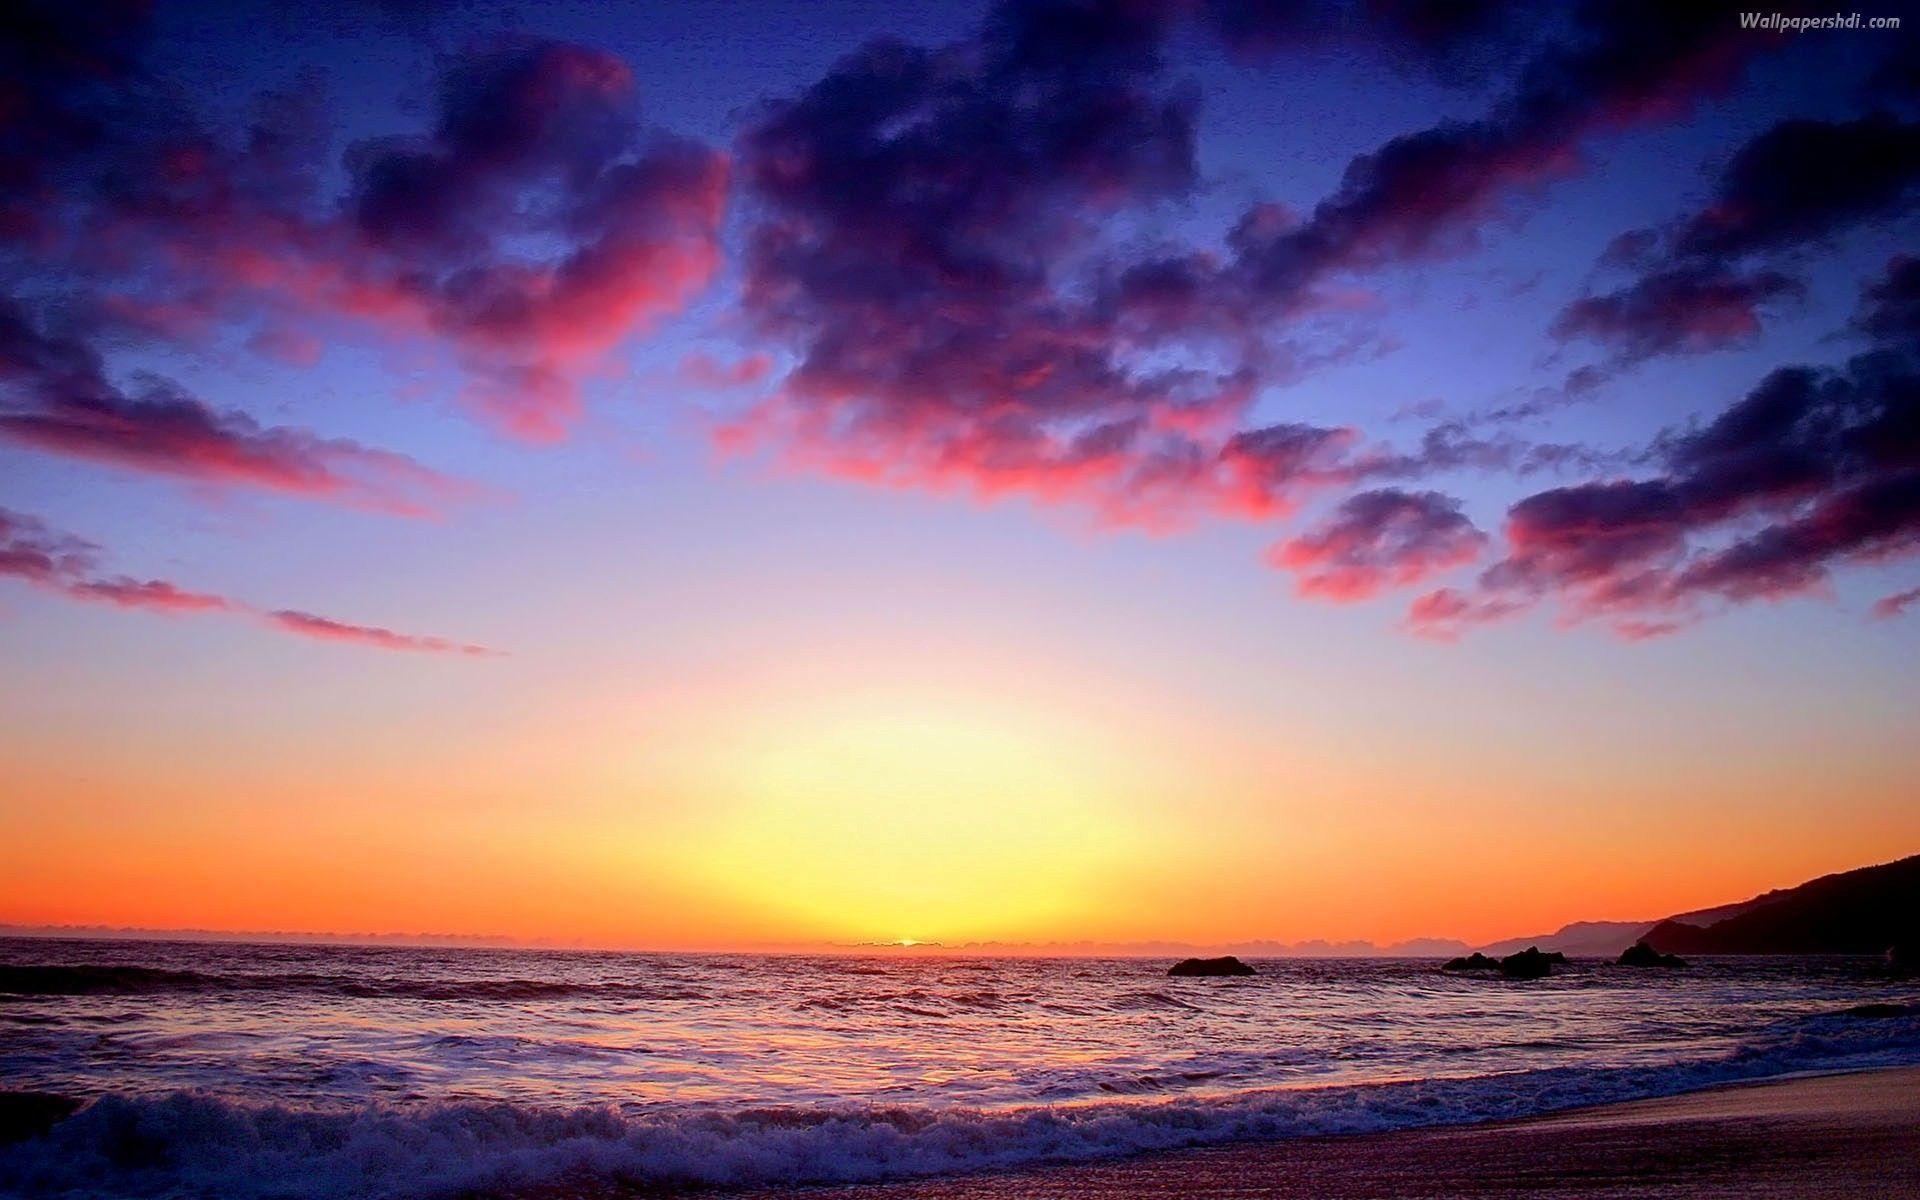 The Beach Sunset 31 HD Image Wallpaper. HD Image Wallpaper